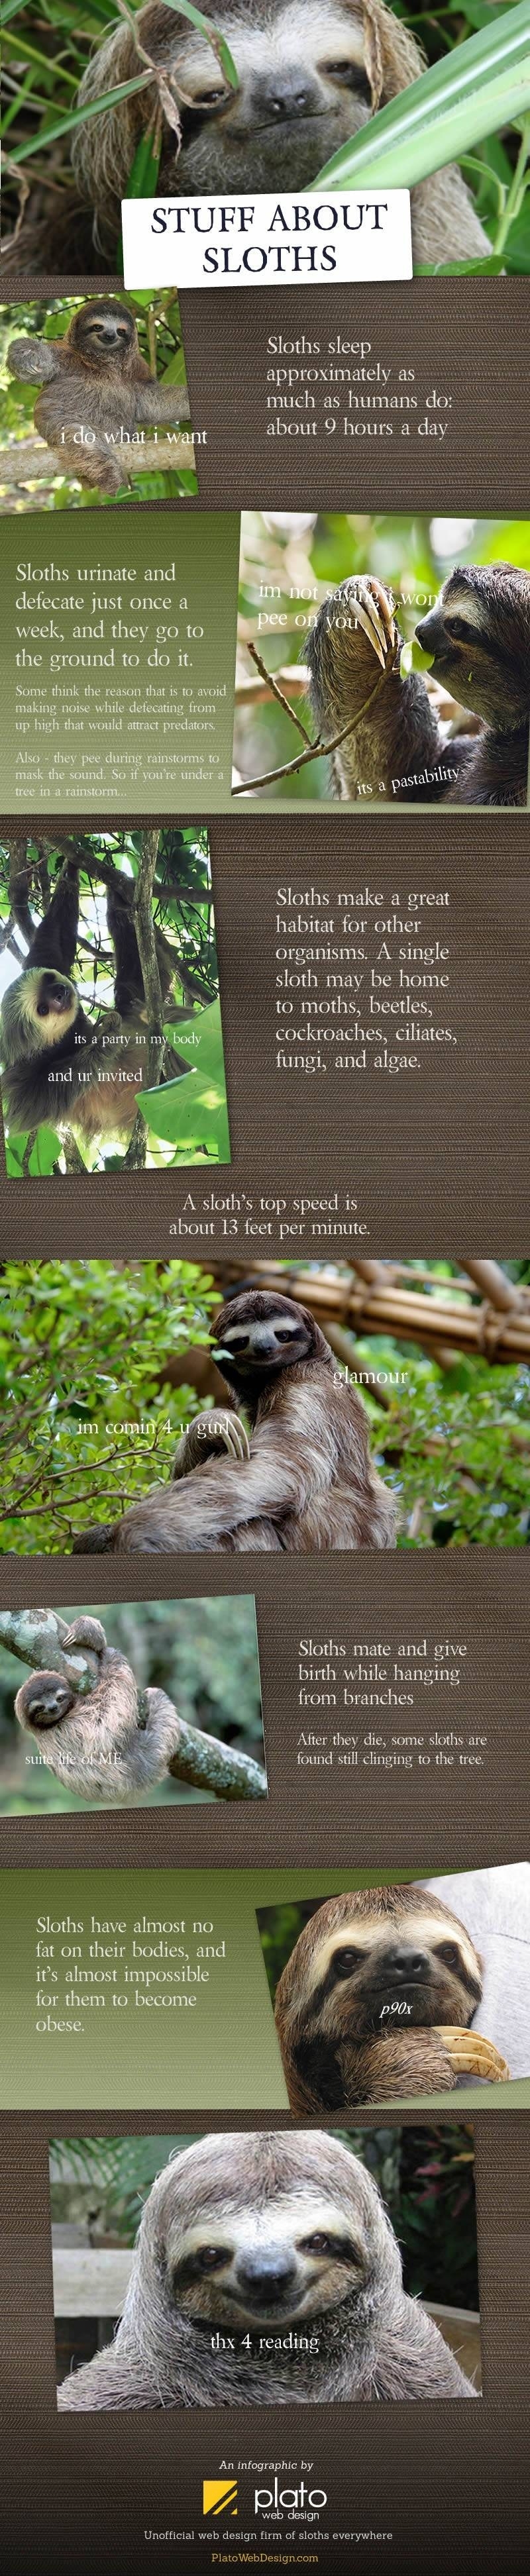 Stuff about sloths